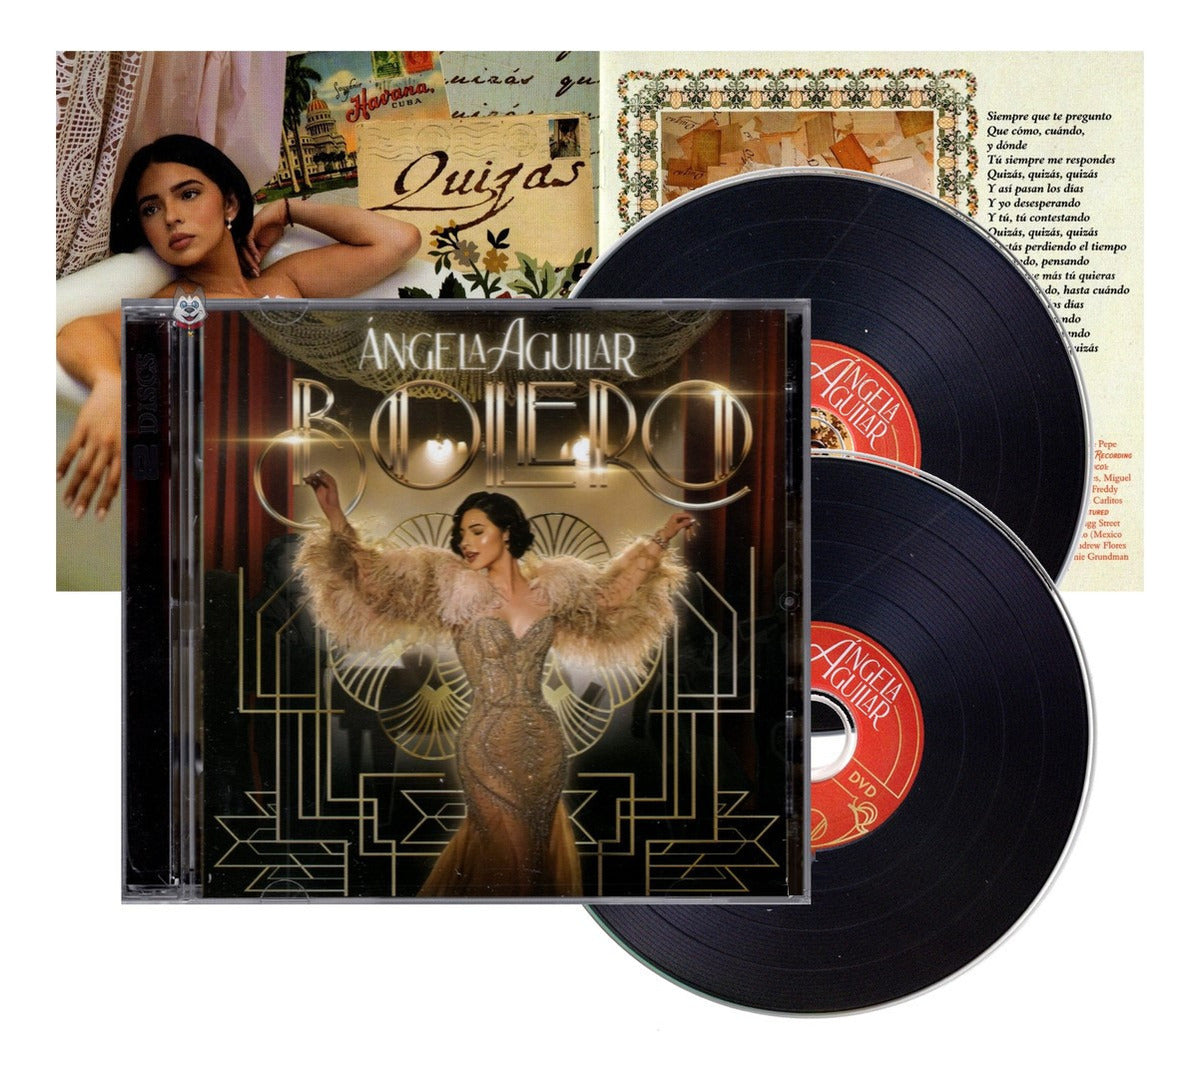 Angela Aguilar Bolero Disco Cd + Dvd